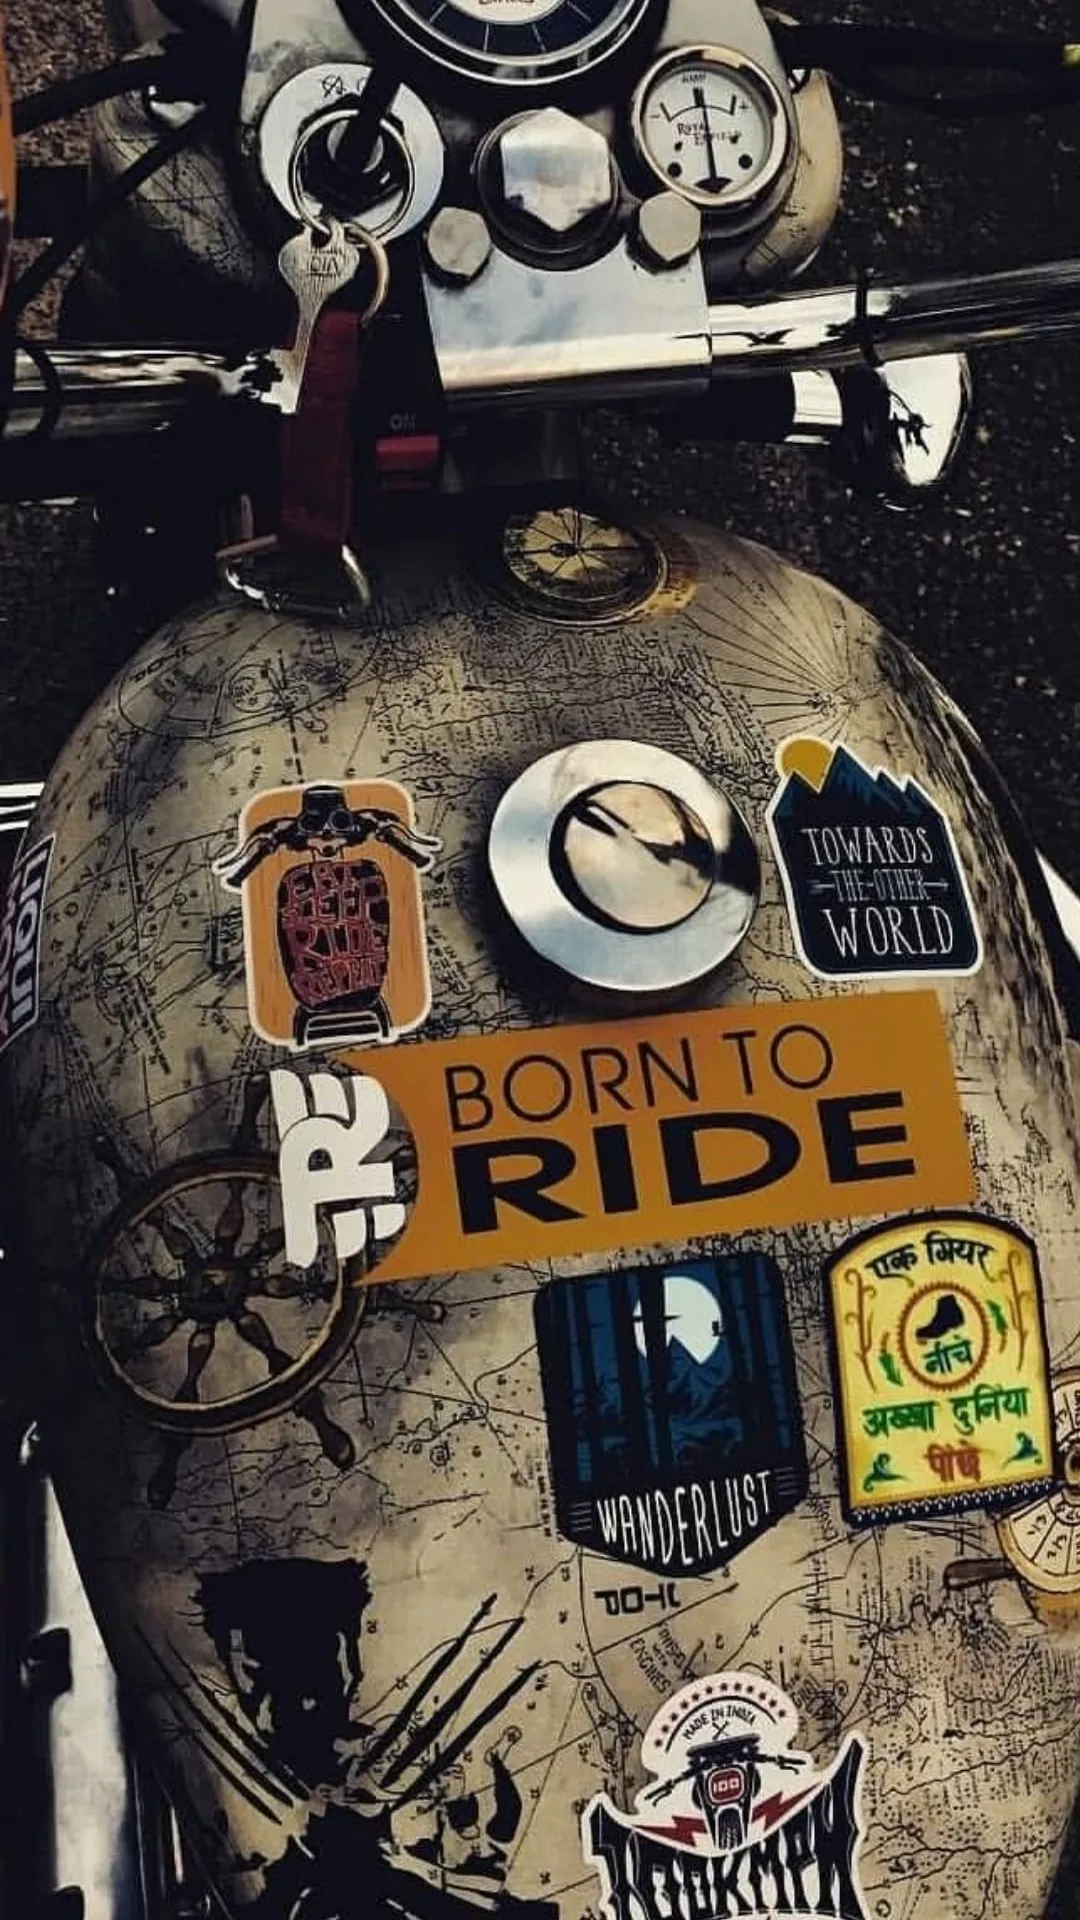 Born to ride stickers